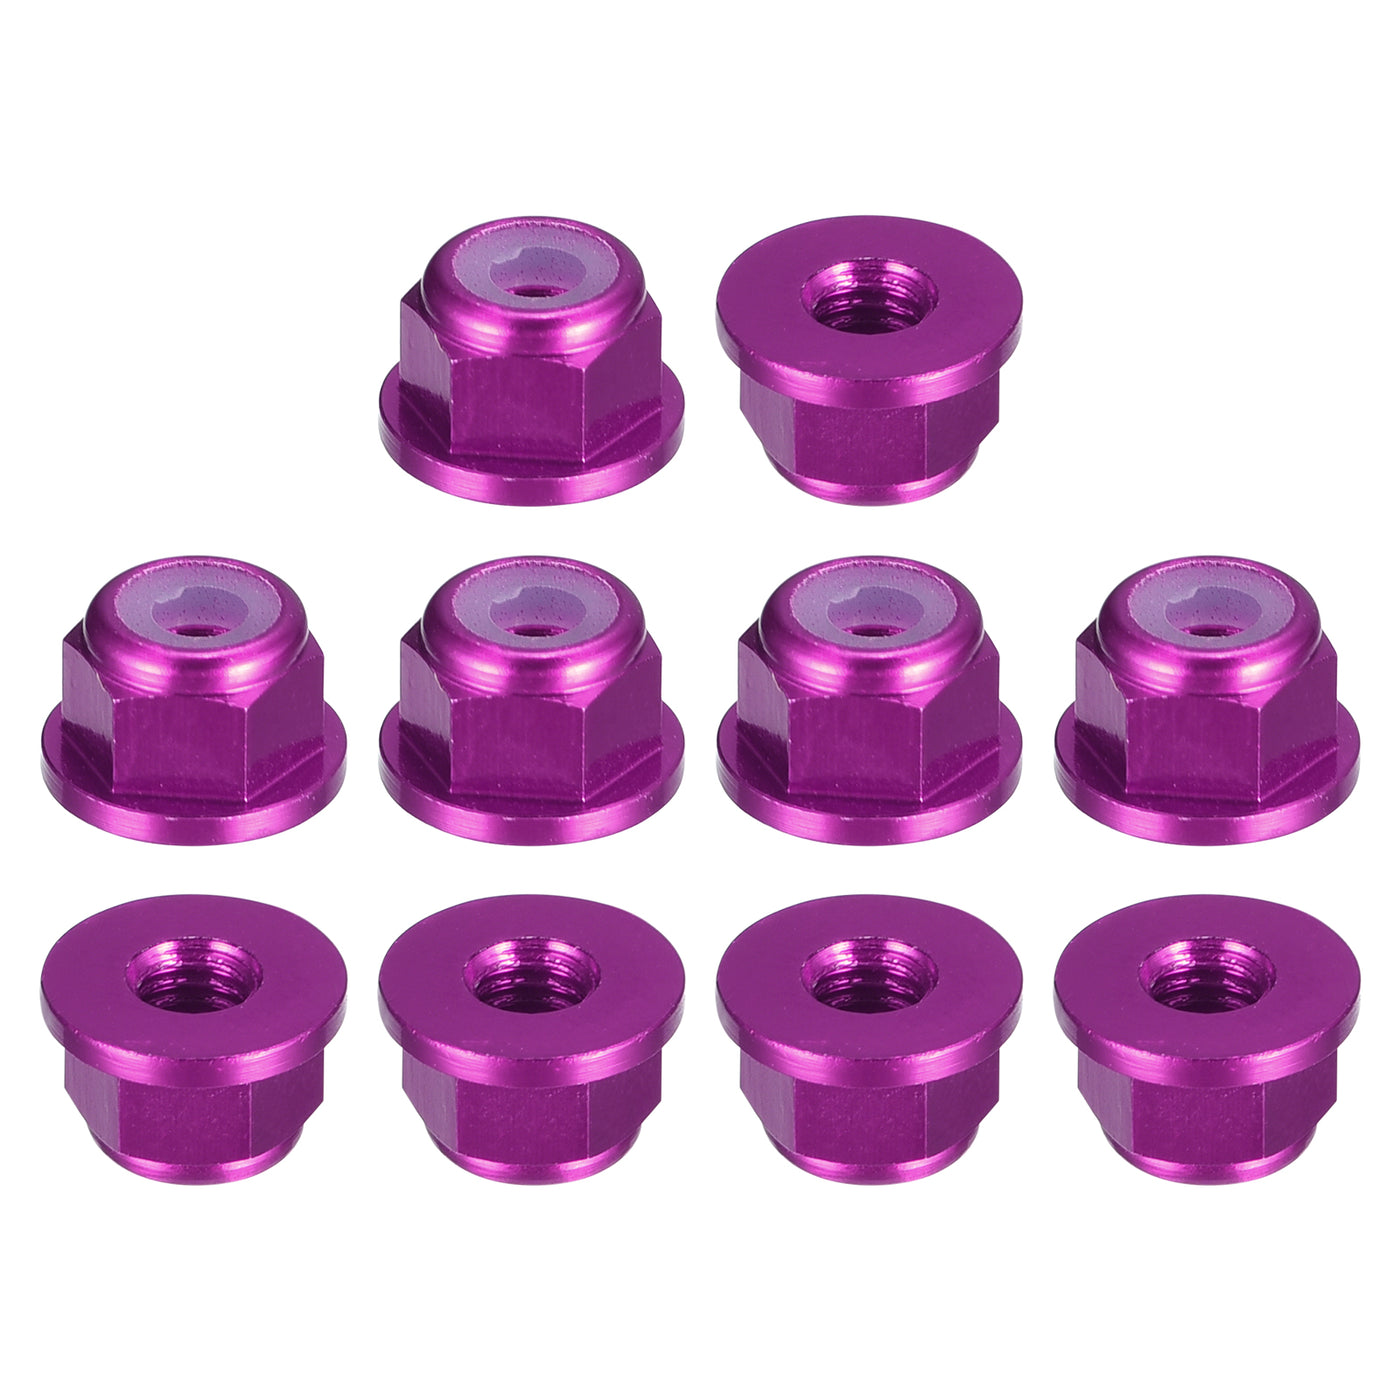 uxcell Uxcell Nylon Insert Hex Lock Nuts, 10pcs - M3 x 0.5mm Aluminum Alloy Self-Locking Nut, Anodizing Flange Lock Nut for Fasteners (Purple)